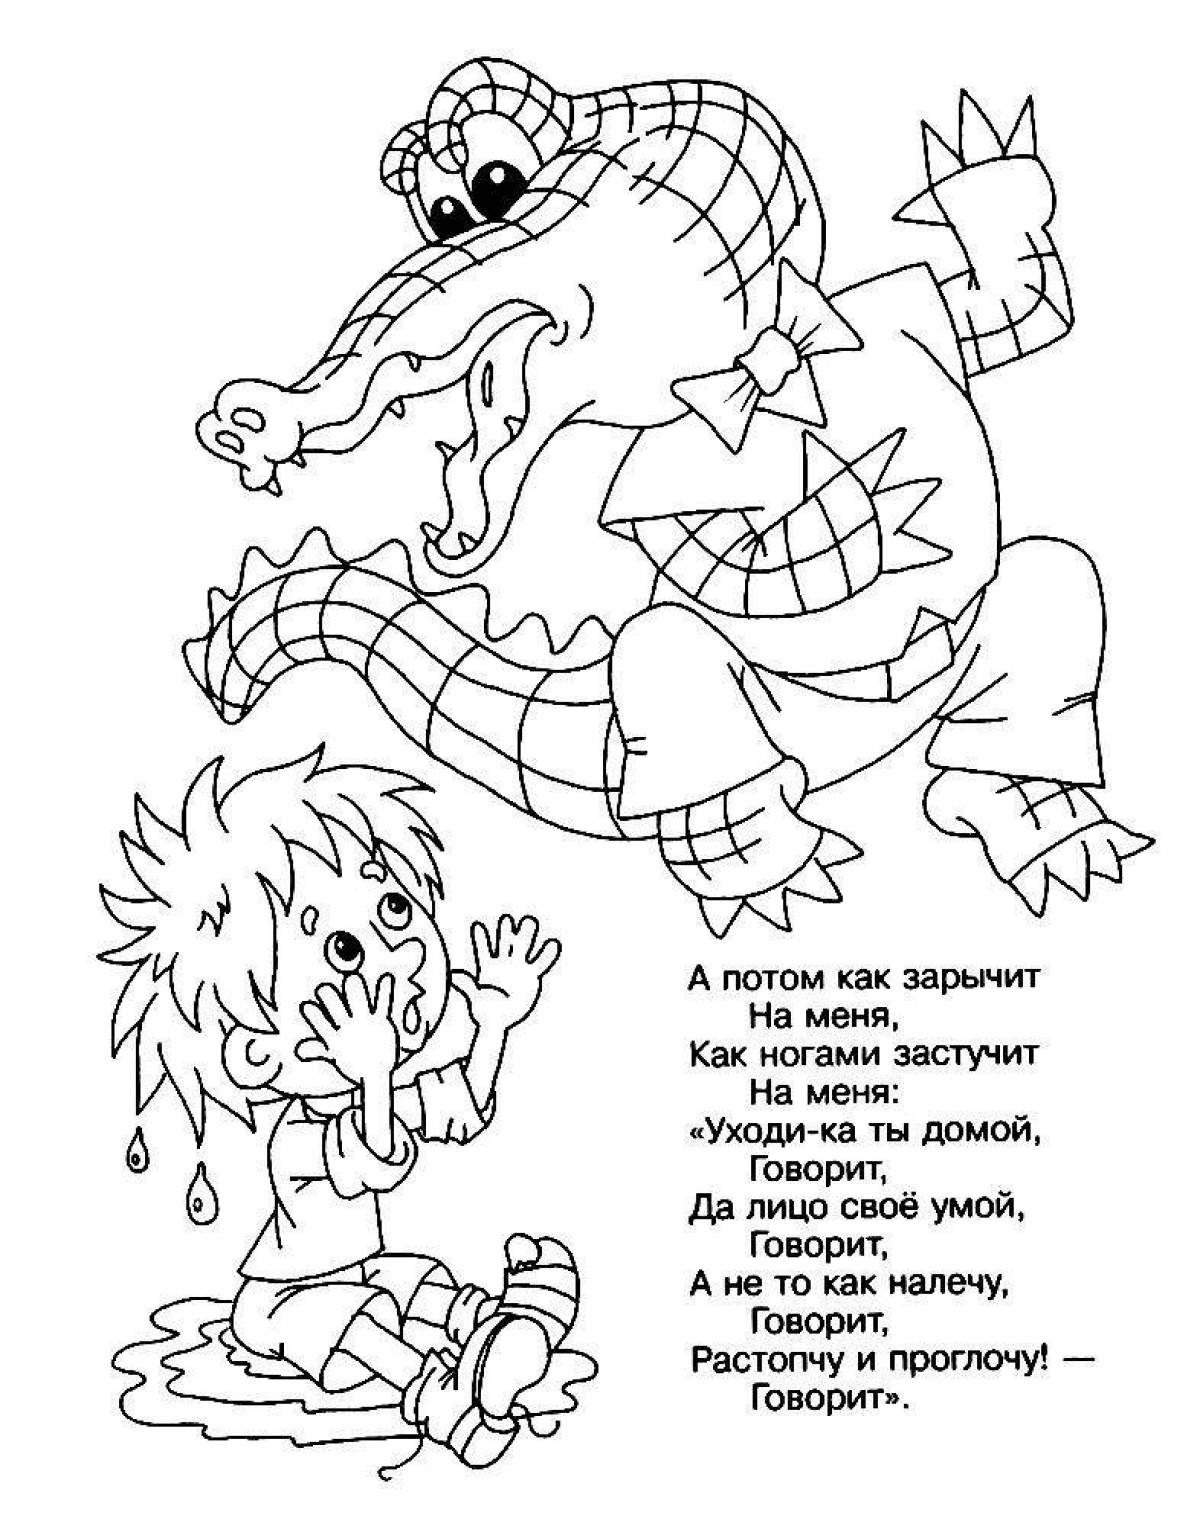 Merry Moidodyr coloring book for preschoolers